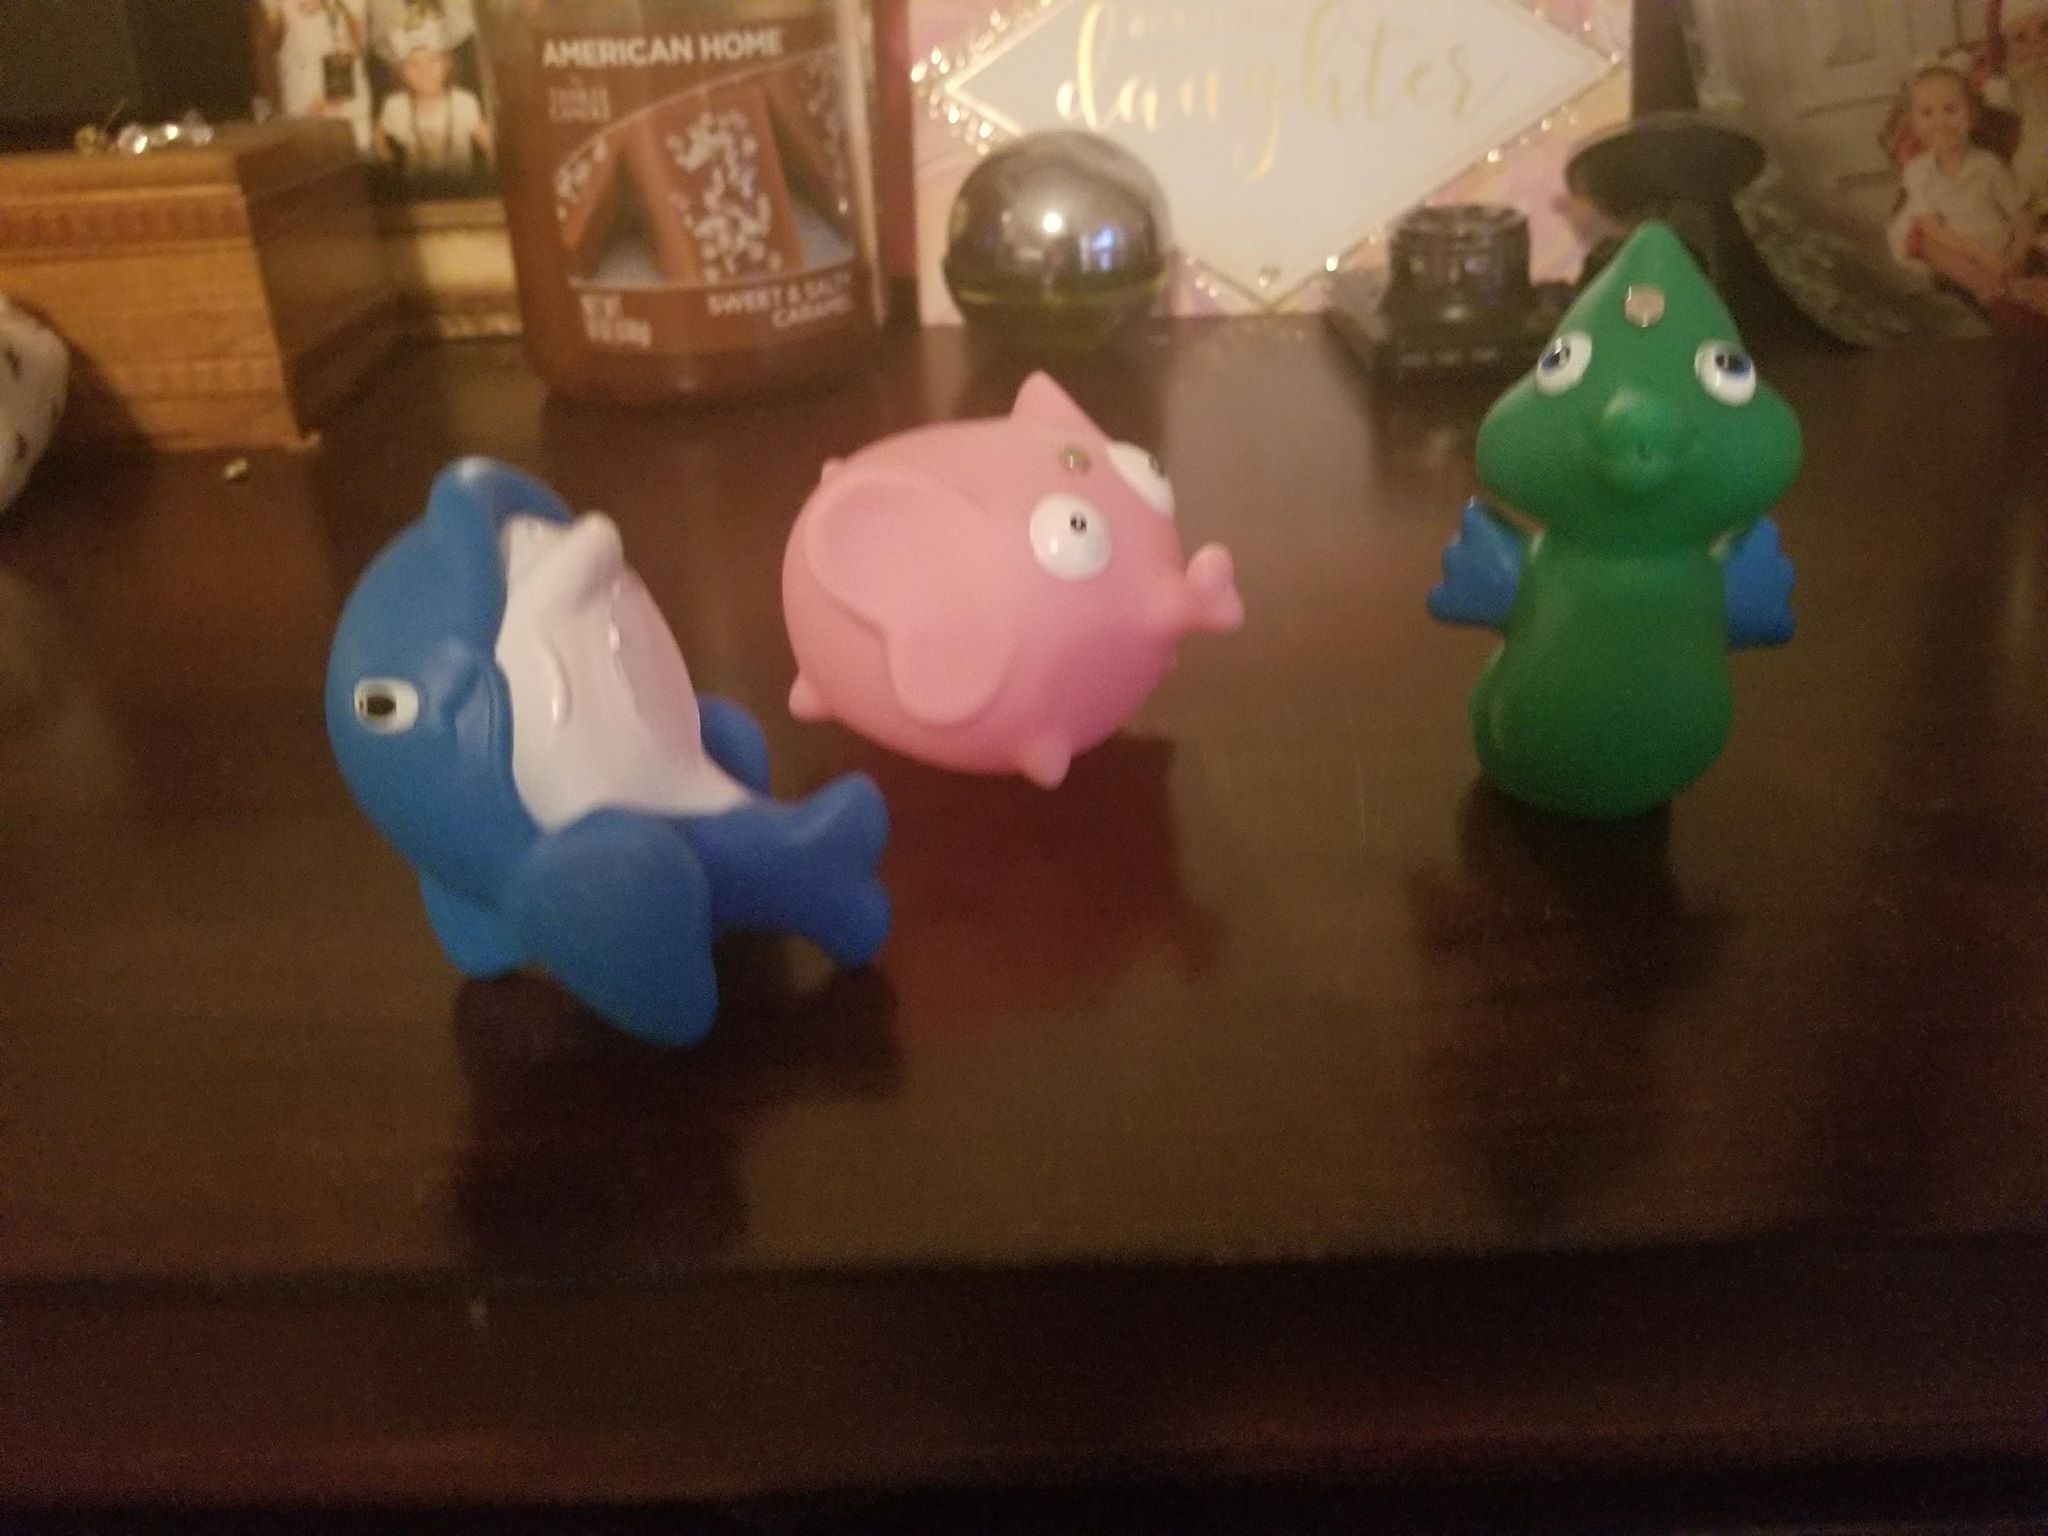 Just the cutest little bath toys.